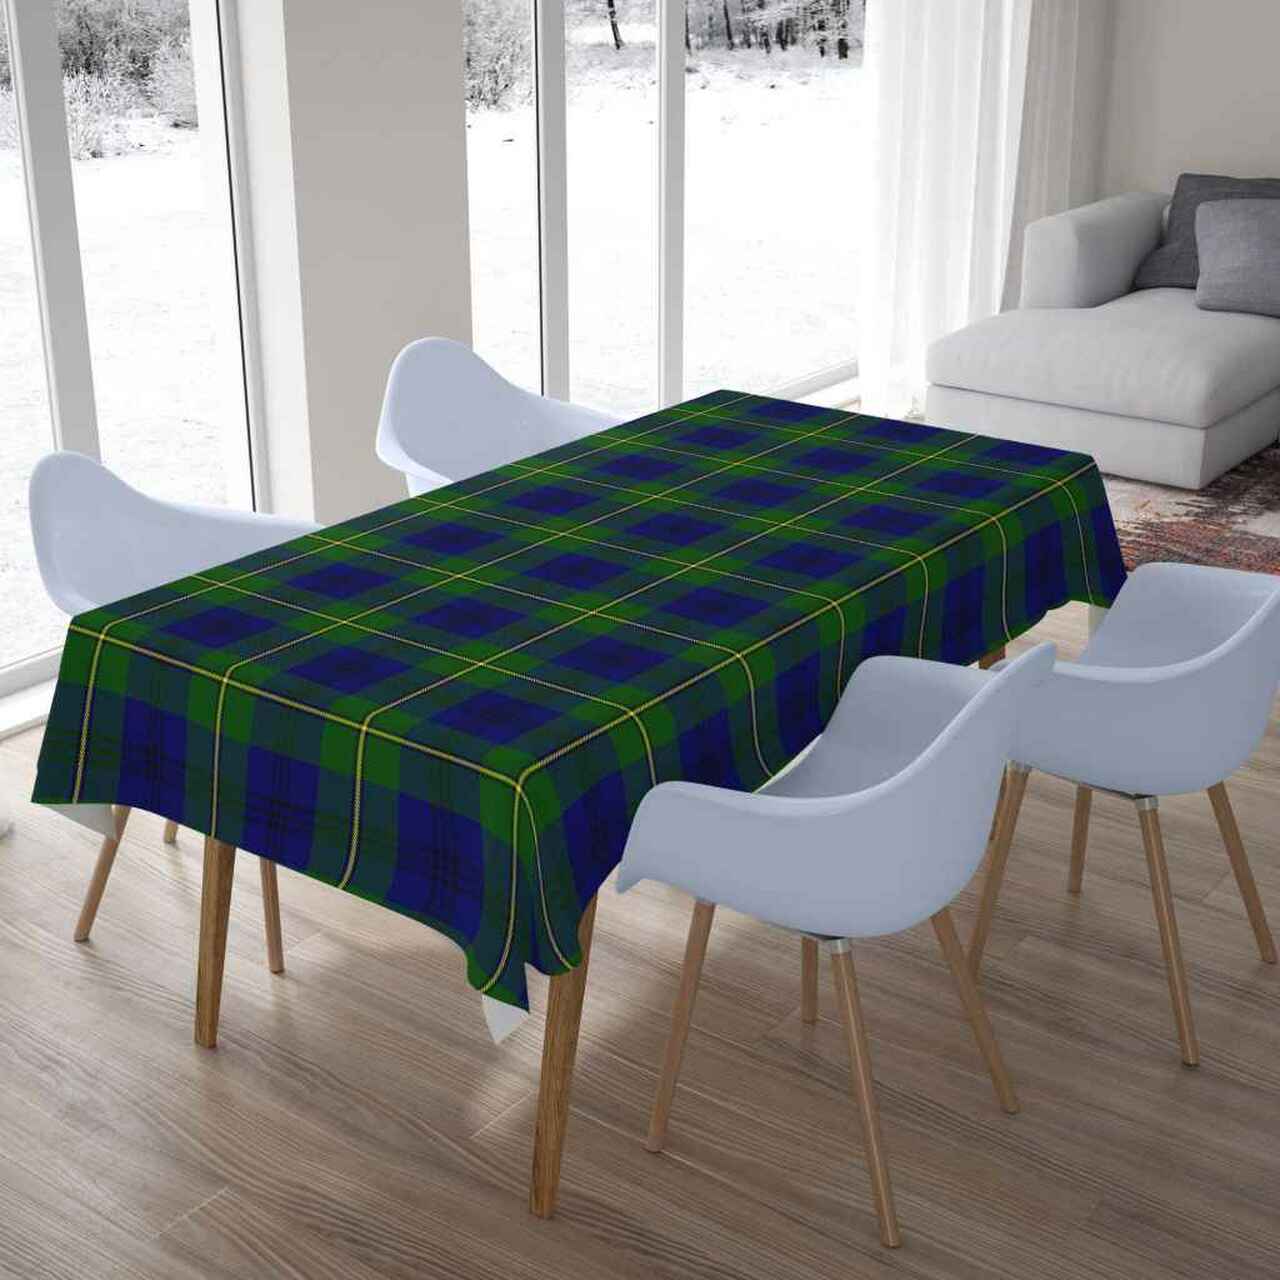 Johnston Modern Tartan Tablecloth